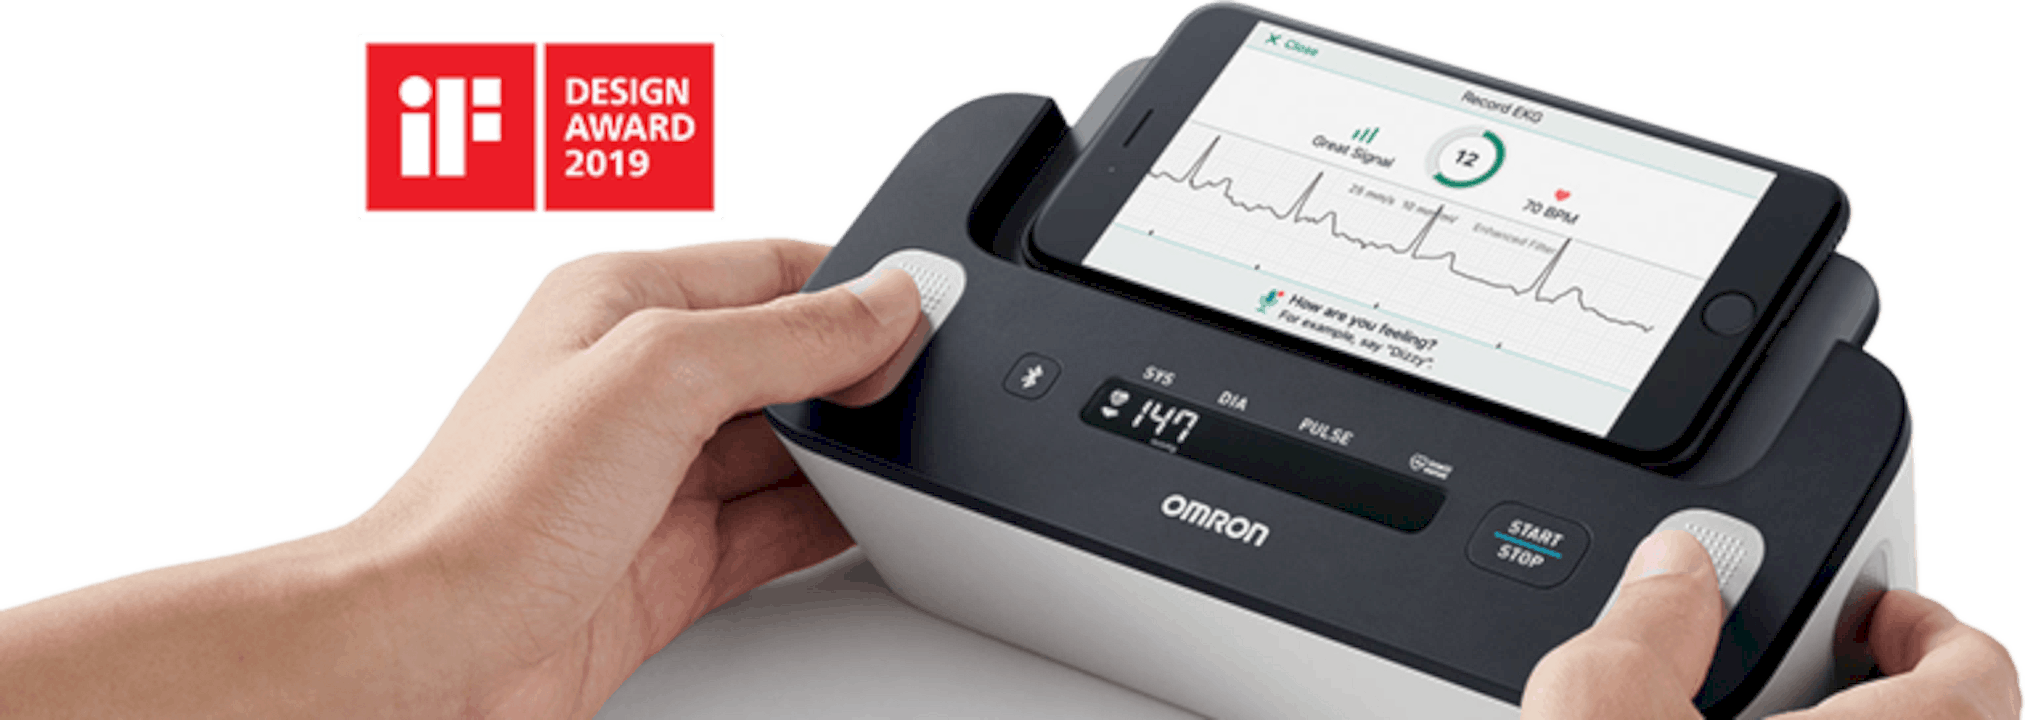 Omron Complete Wireless Upper Arm Blood Pressure Monitor Ekg 1